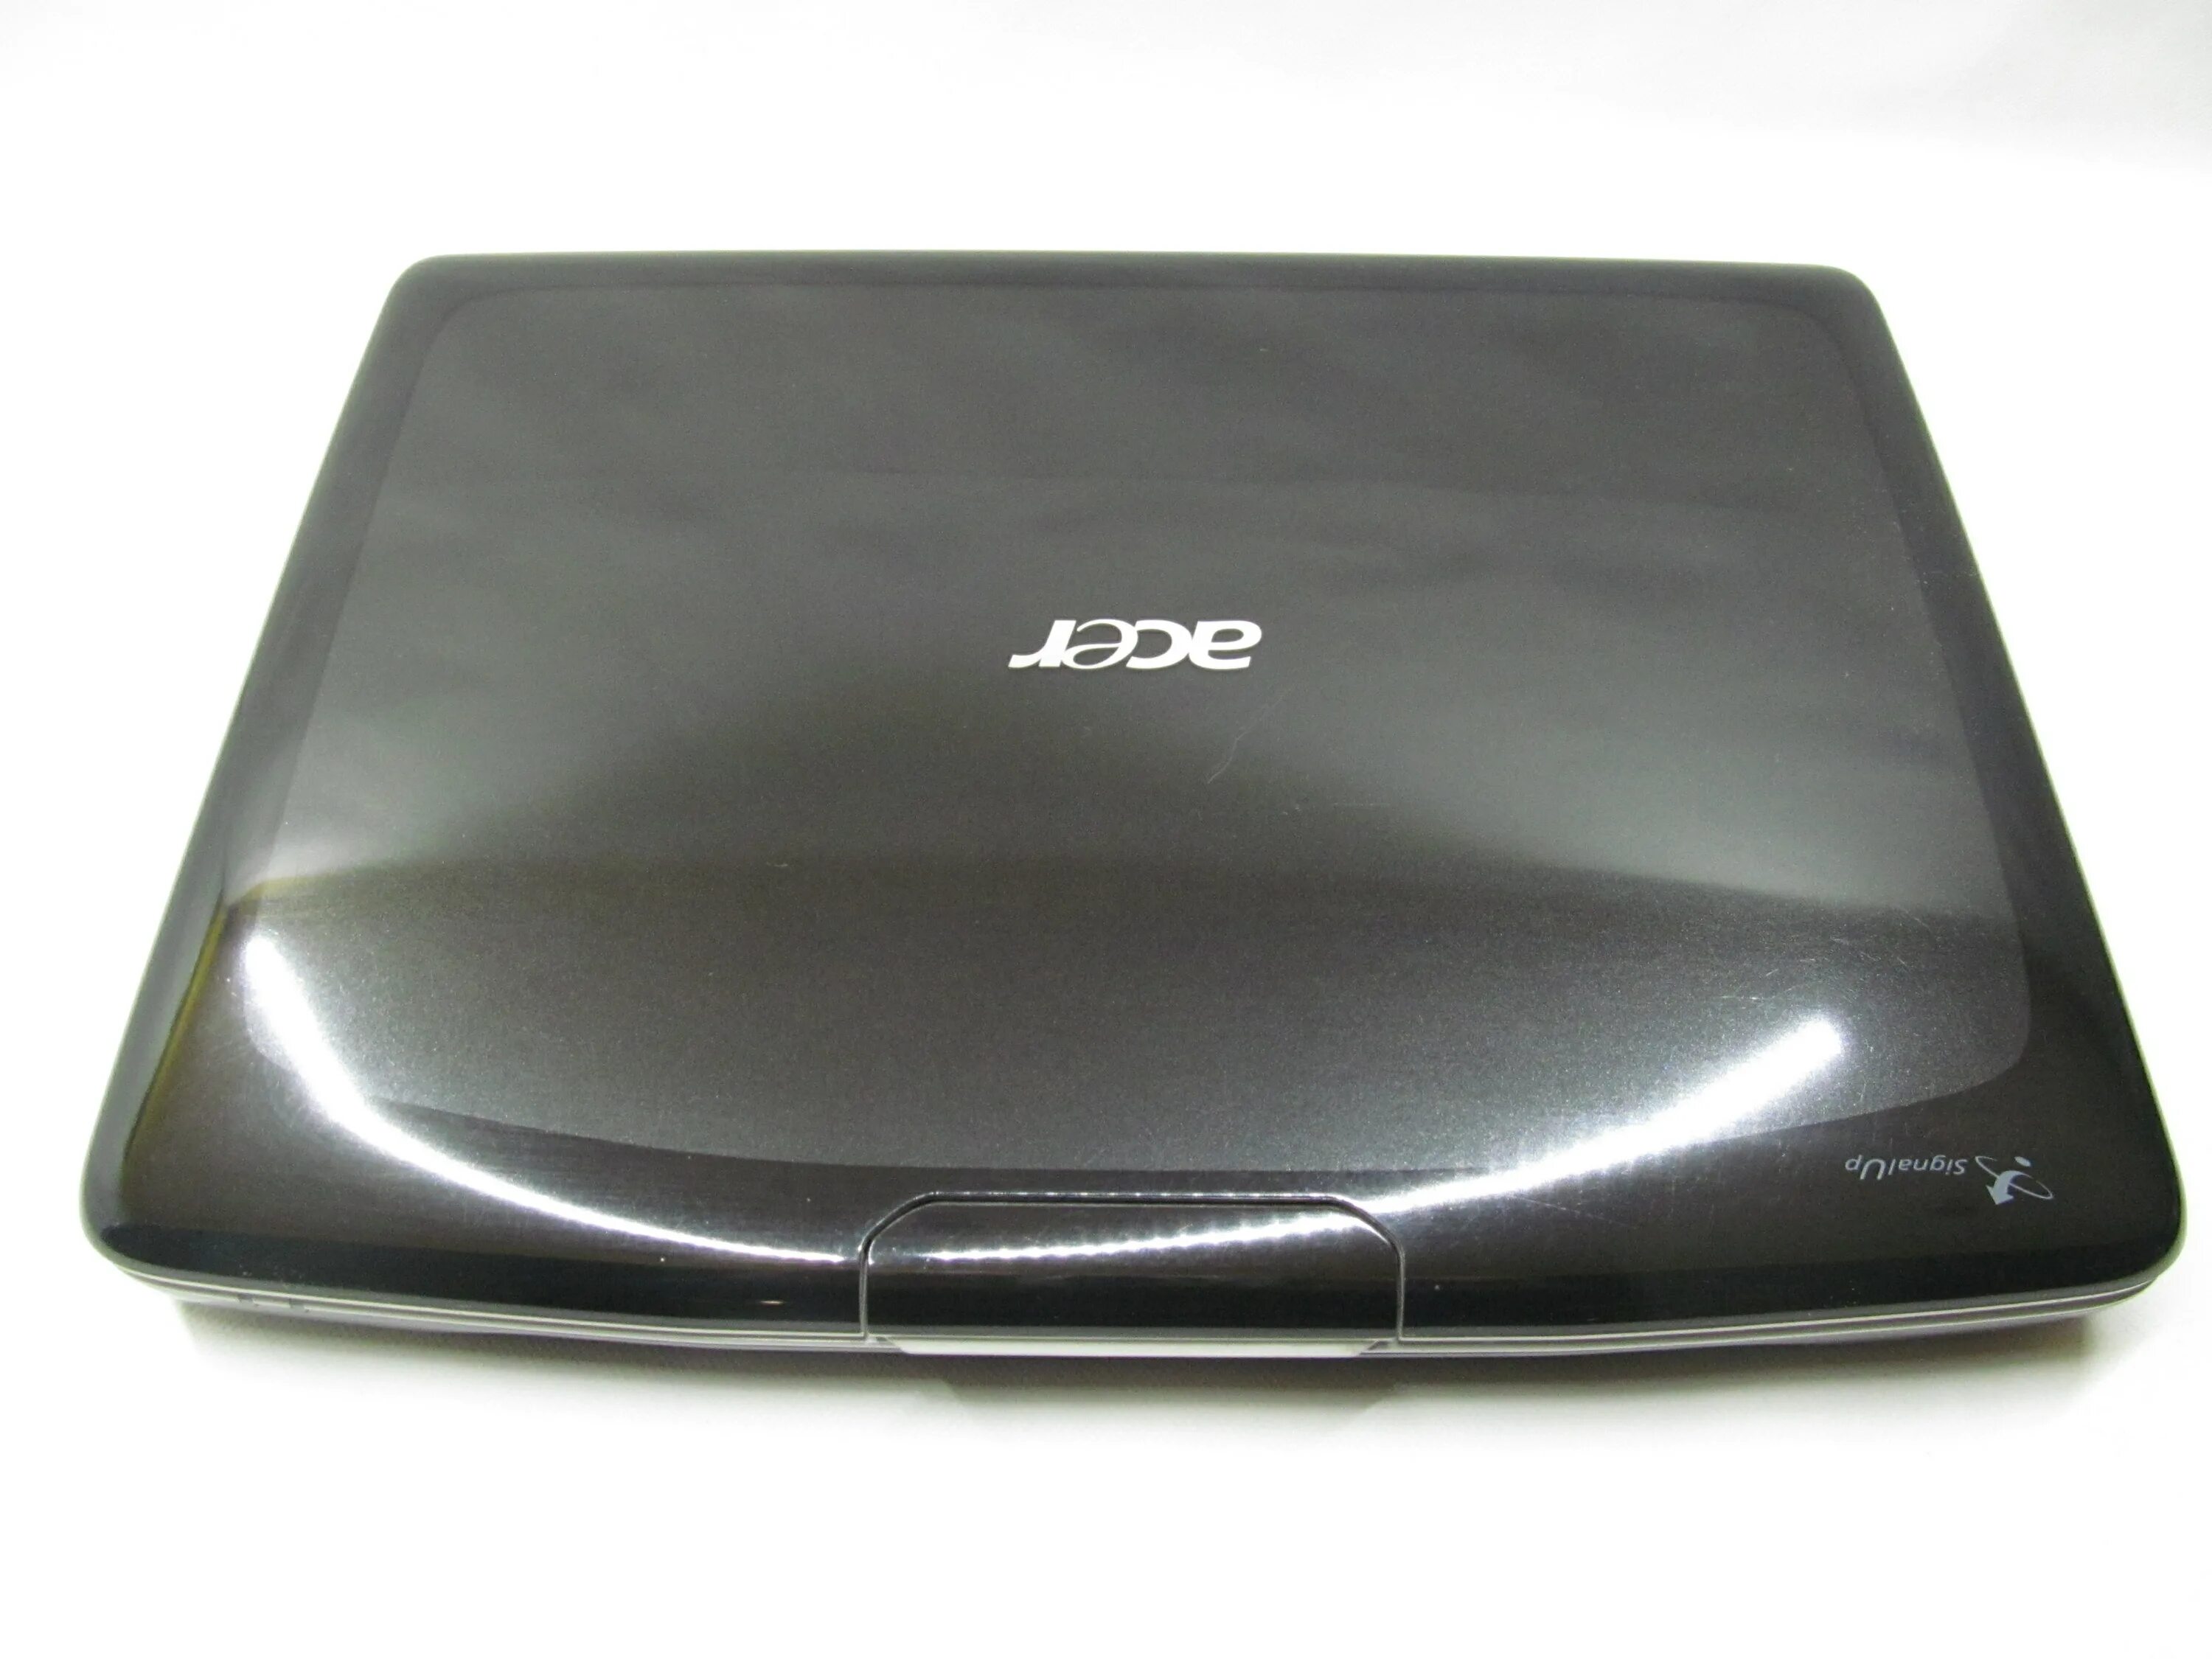 Acer Aspire 5920g. Ноутбук Acer Aspire 5920. Acer as 5920g. Ноутбук Асер Aspire 5920. Купить ноутбук на озоне недорого